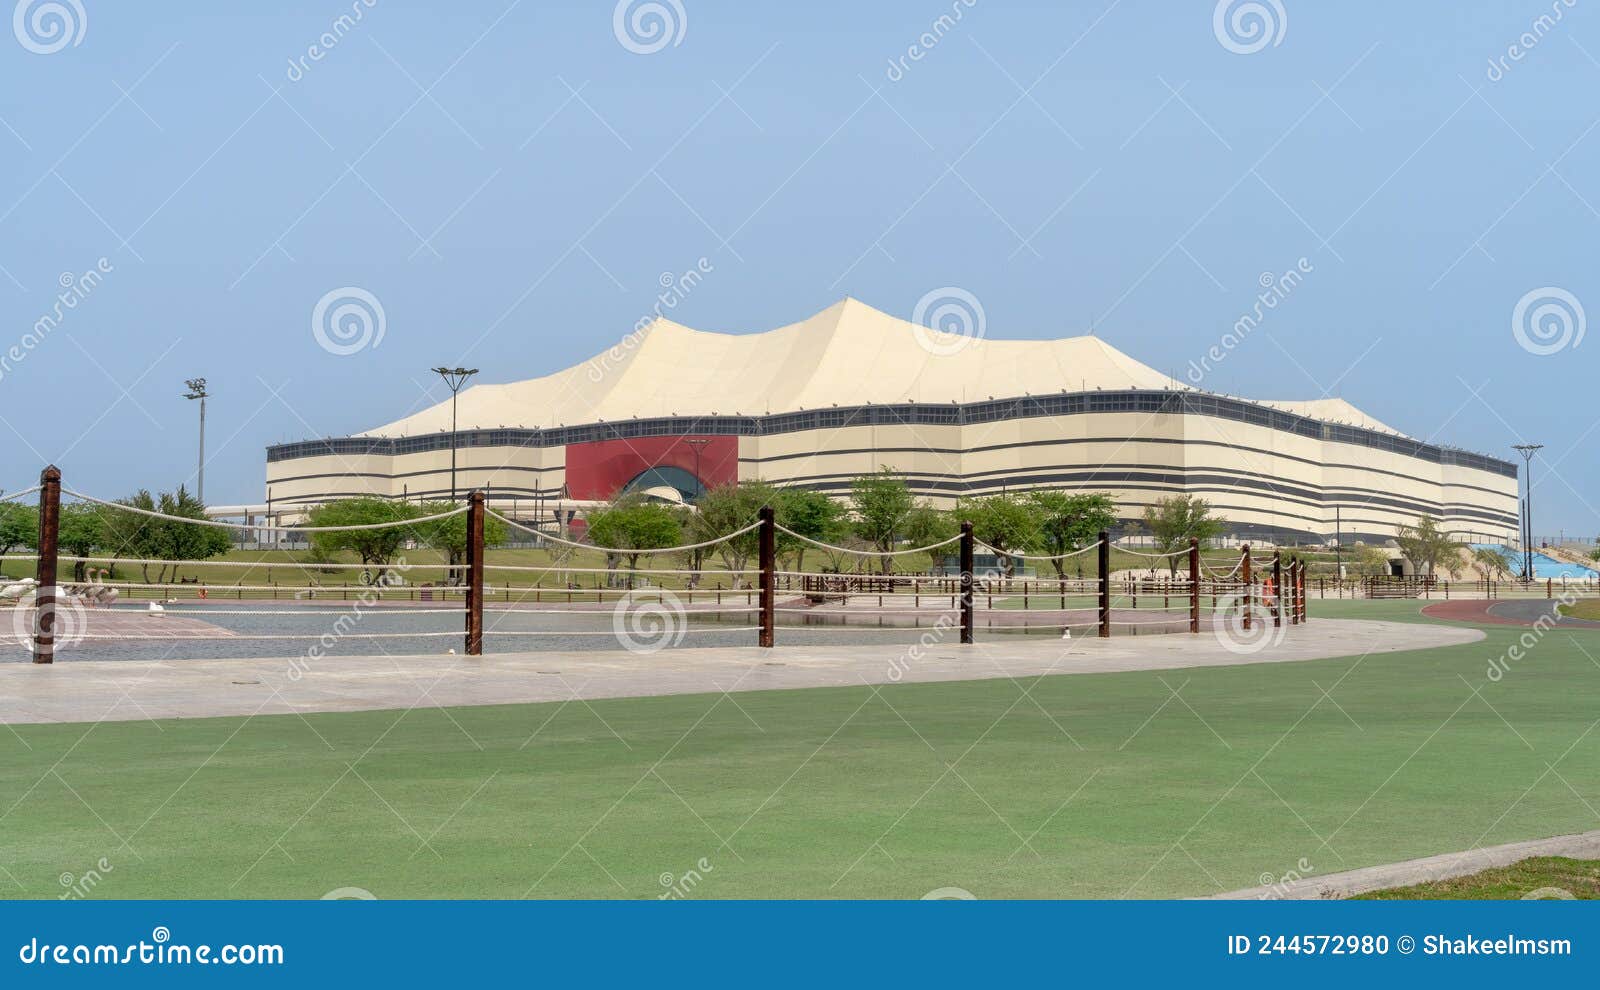 al khor, qatar- march 03 2022:one of the venues of fifa worldcup 2022, al bayt stadium